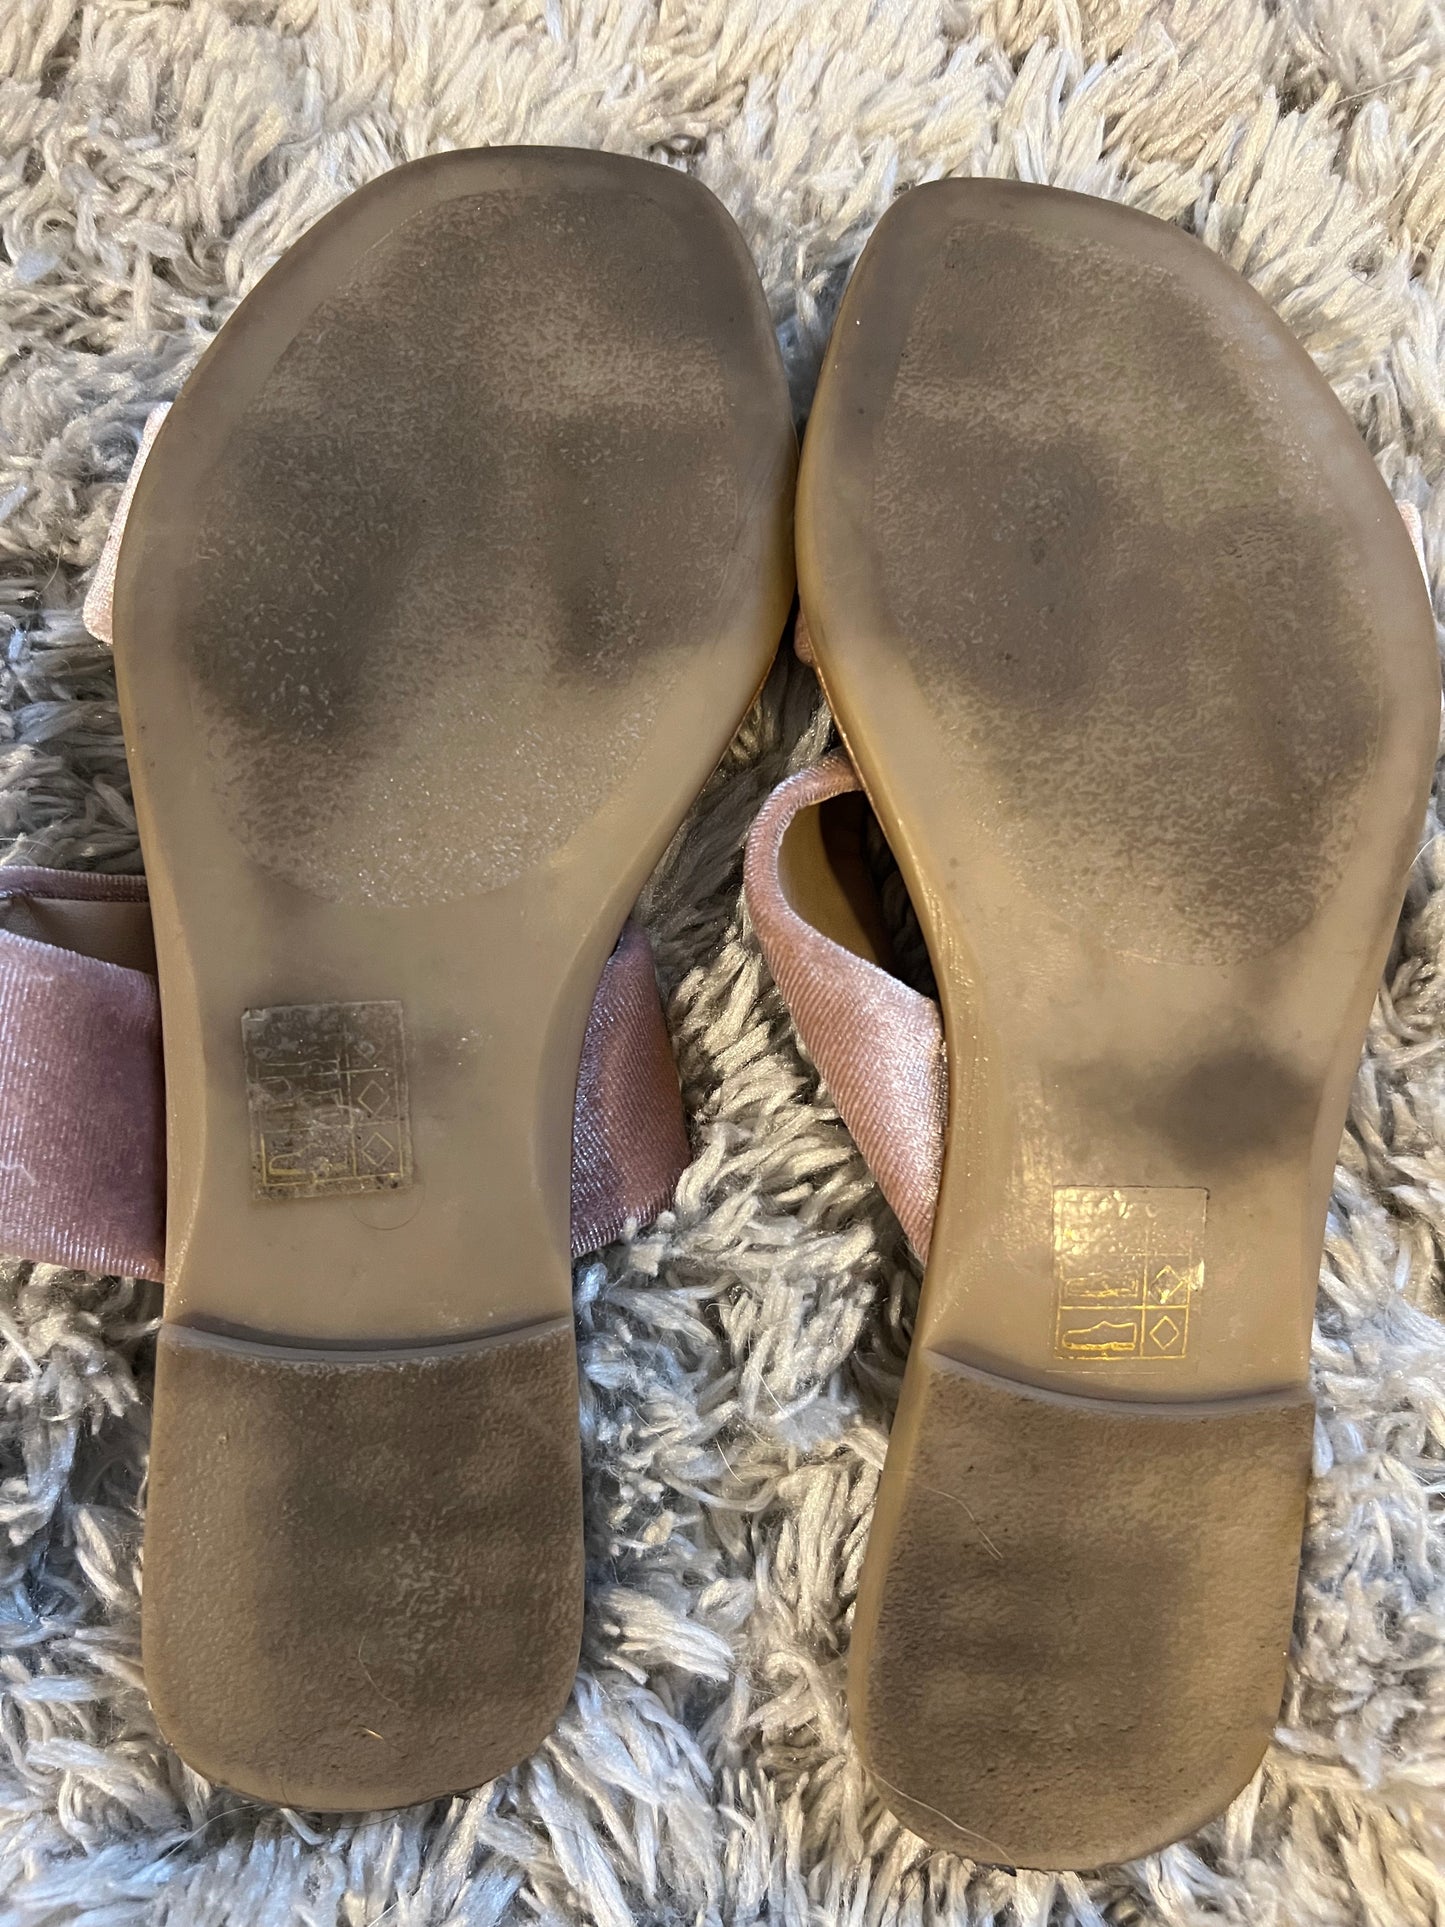 Saks Fifth Avenue Velvet Flat Sandals Woman Pink Open Toe Slide Summer Shoe Size 6.5 EUC PPU 45208 or Spring Sale